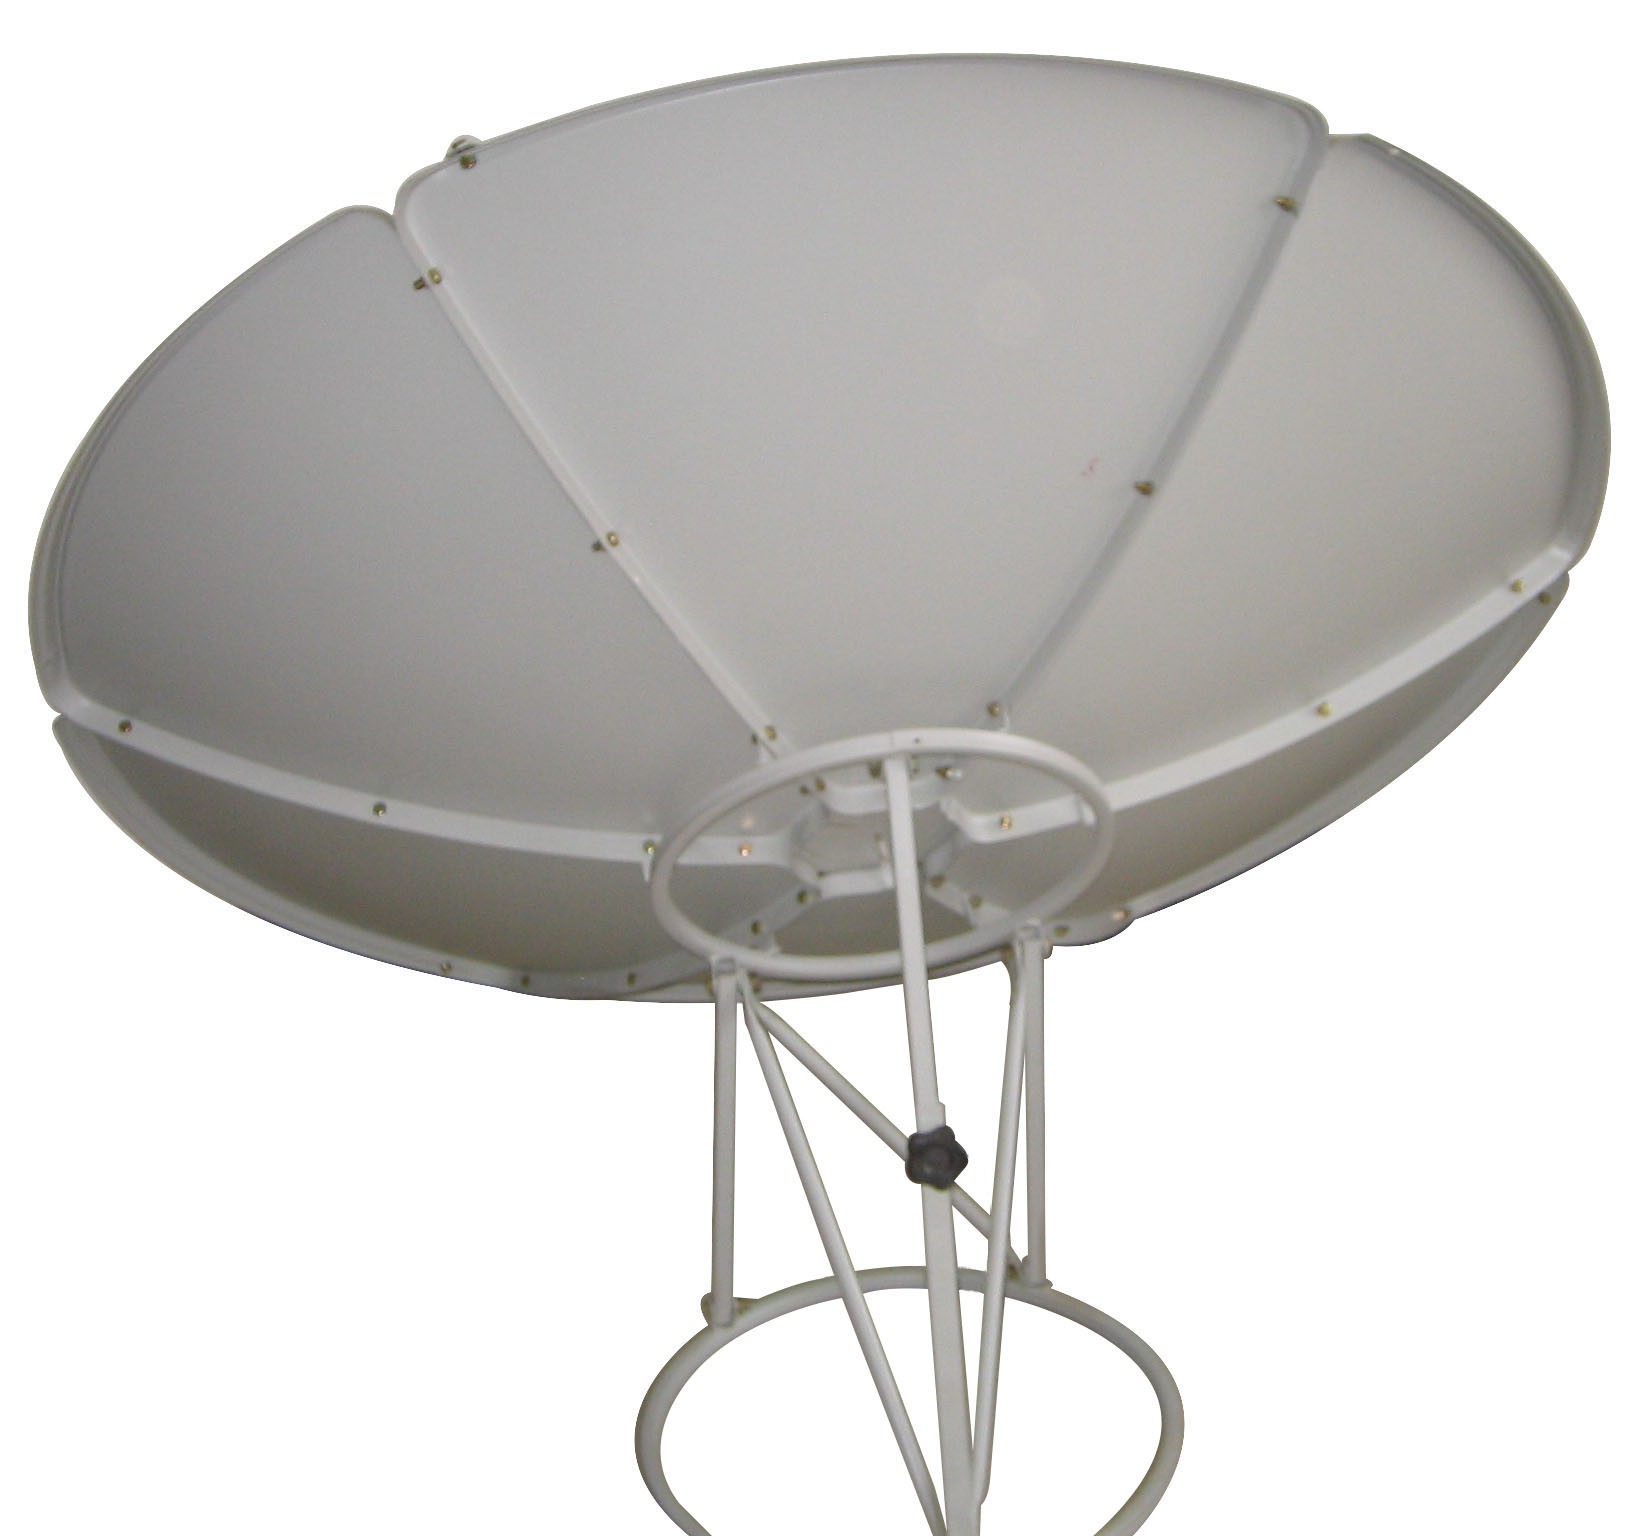 180cm C banda antena antena parabólica, foco principal